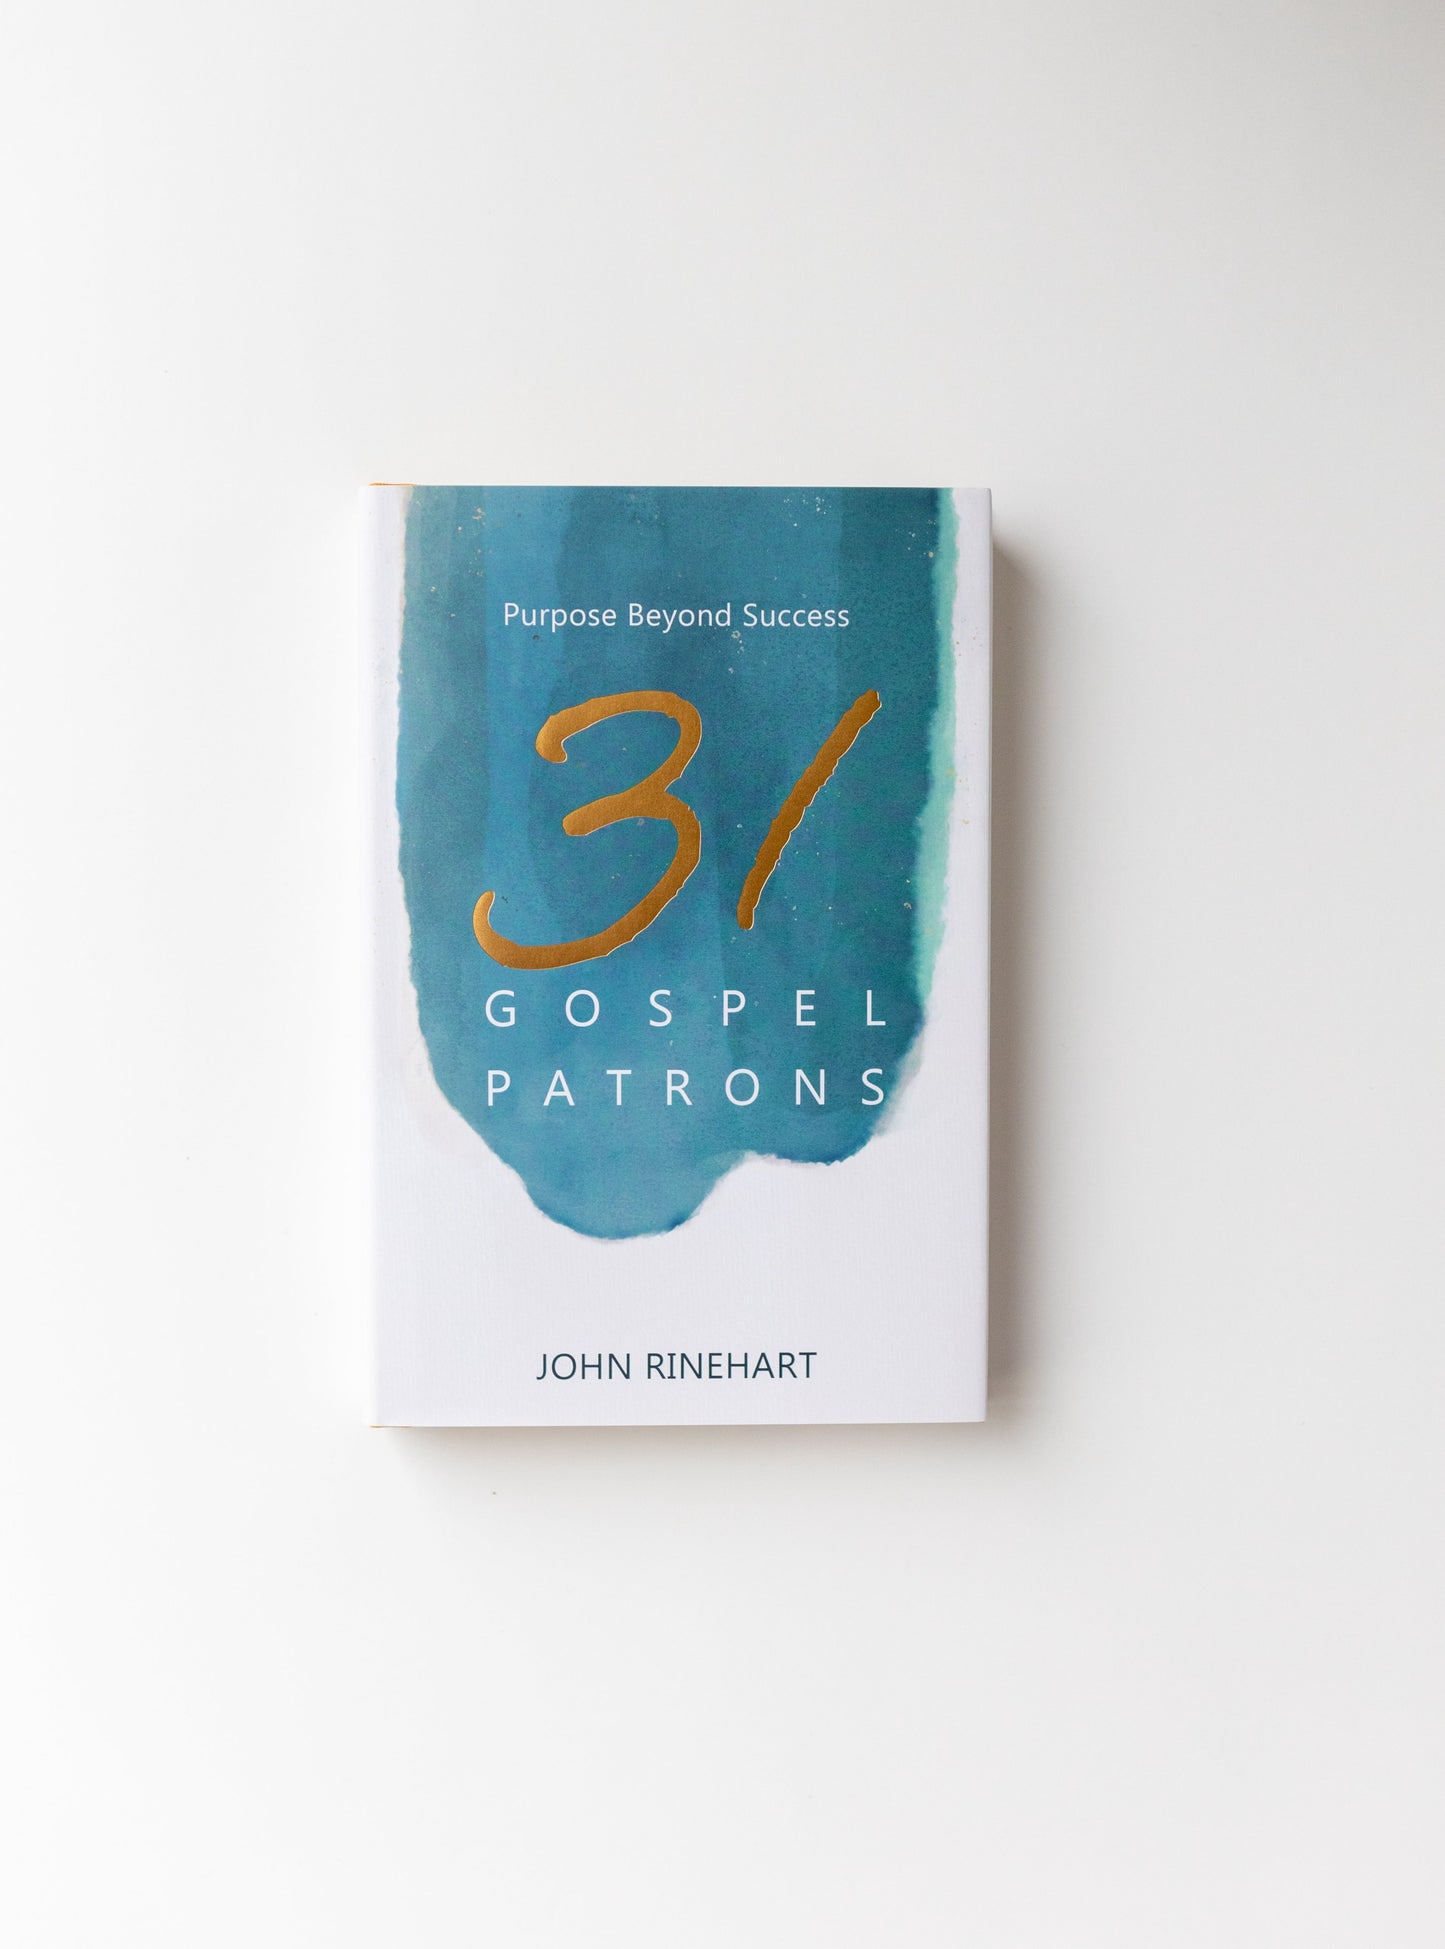 31 Gospel Patrons